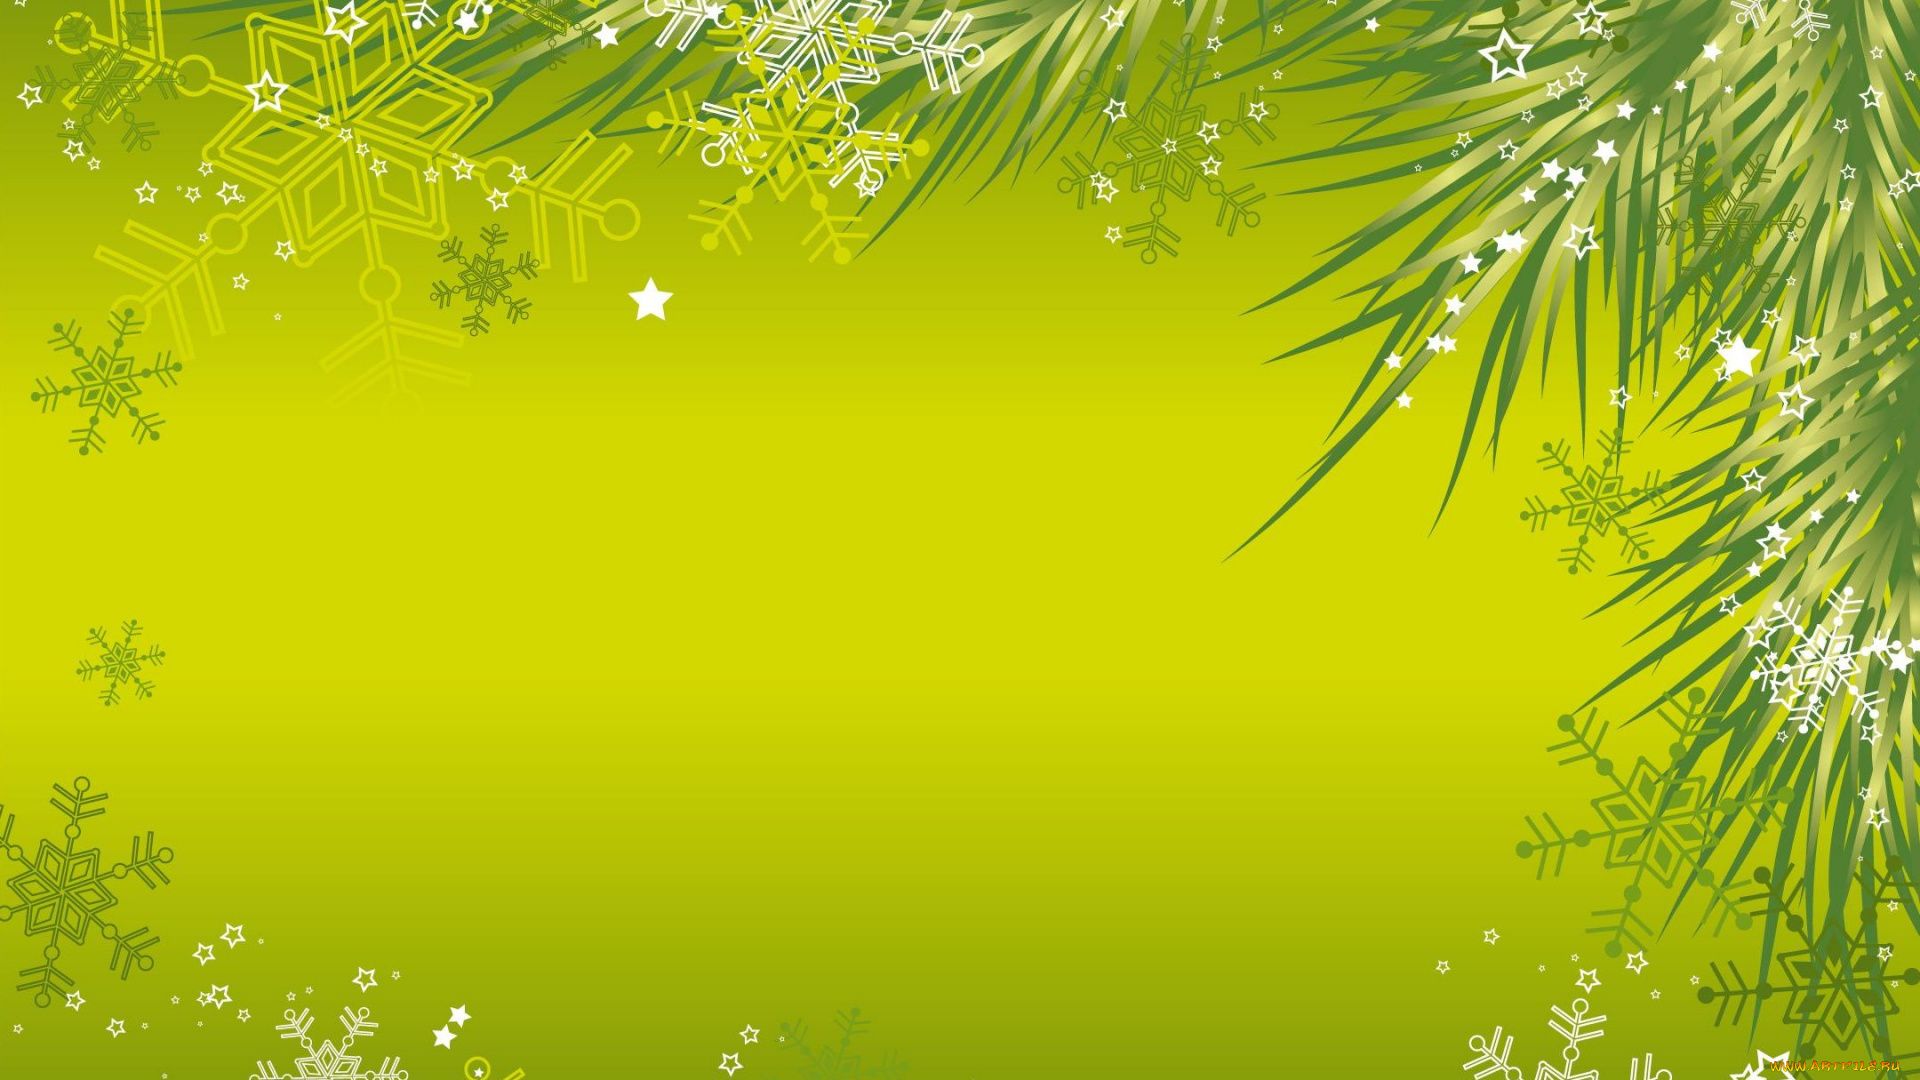 Green Christmas desktop wallpaper download